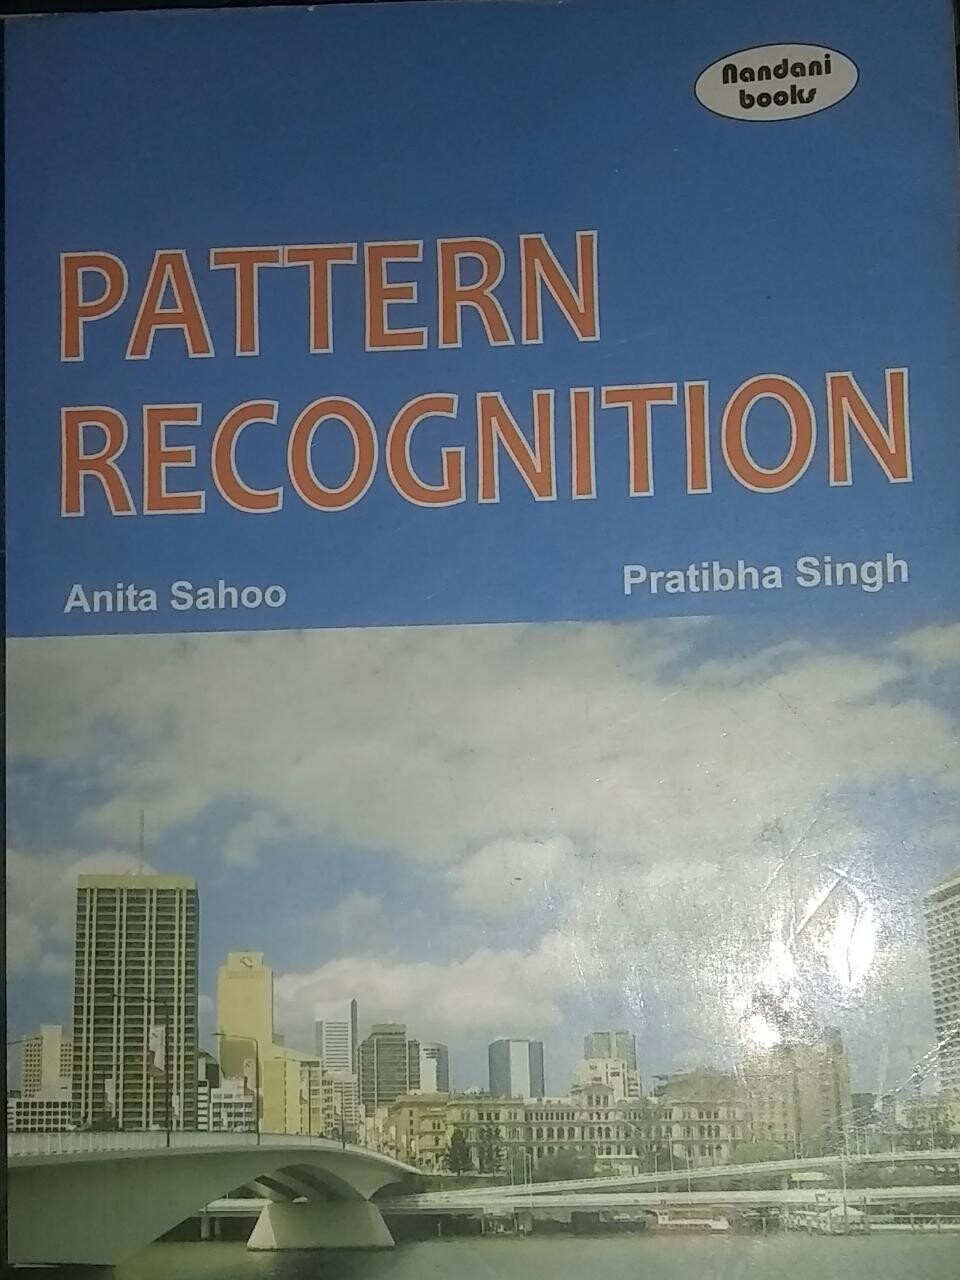 Pattern Recognition by Anita Sahoo and Pratibha Singh